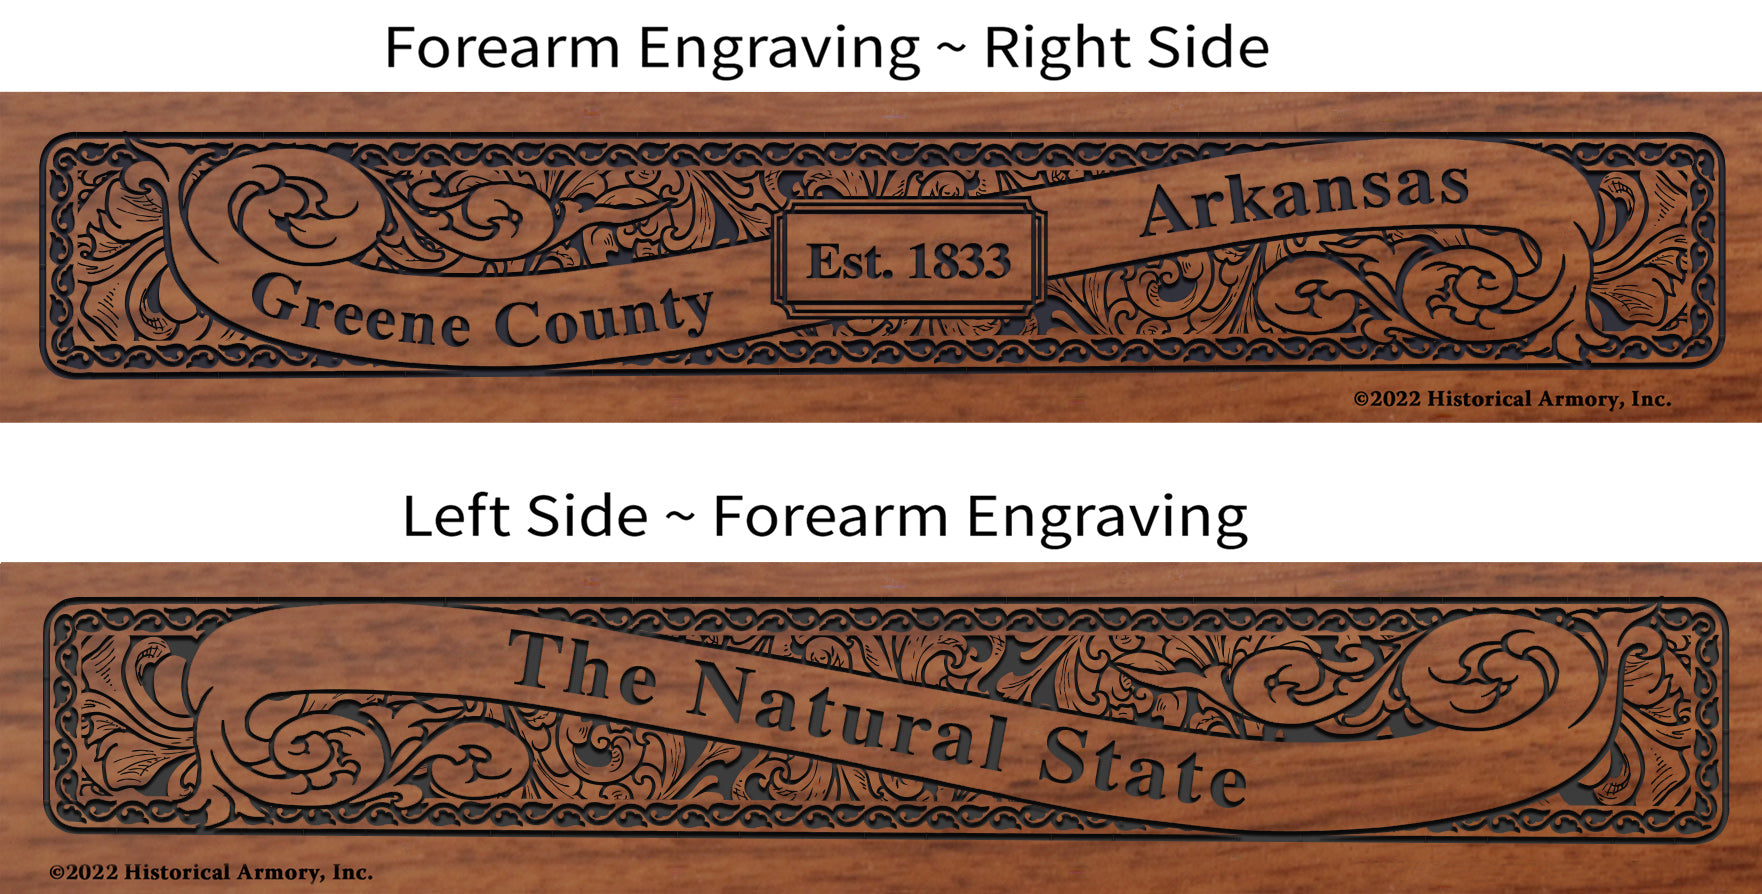 Greene County Arkansas Engraved Rifle Forearm